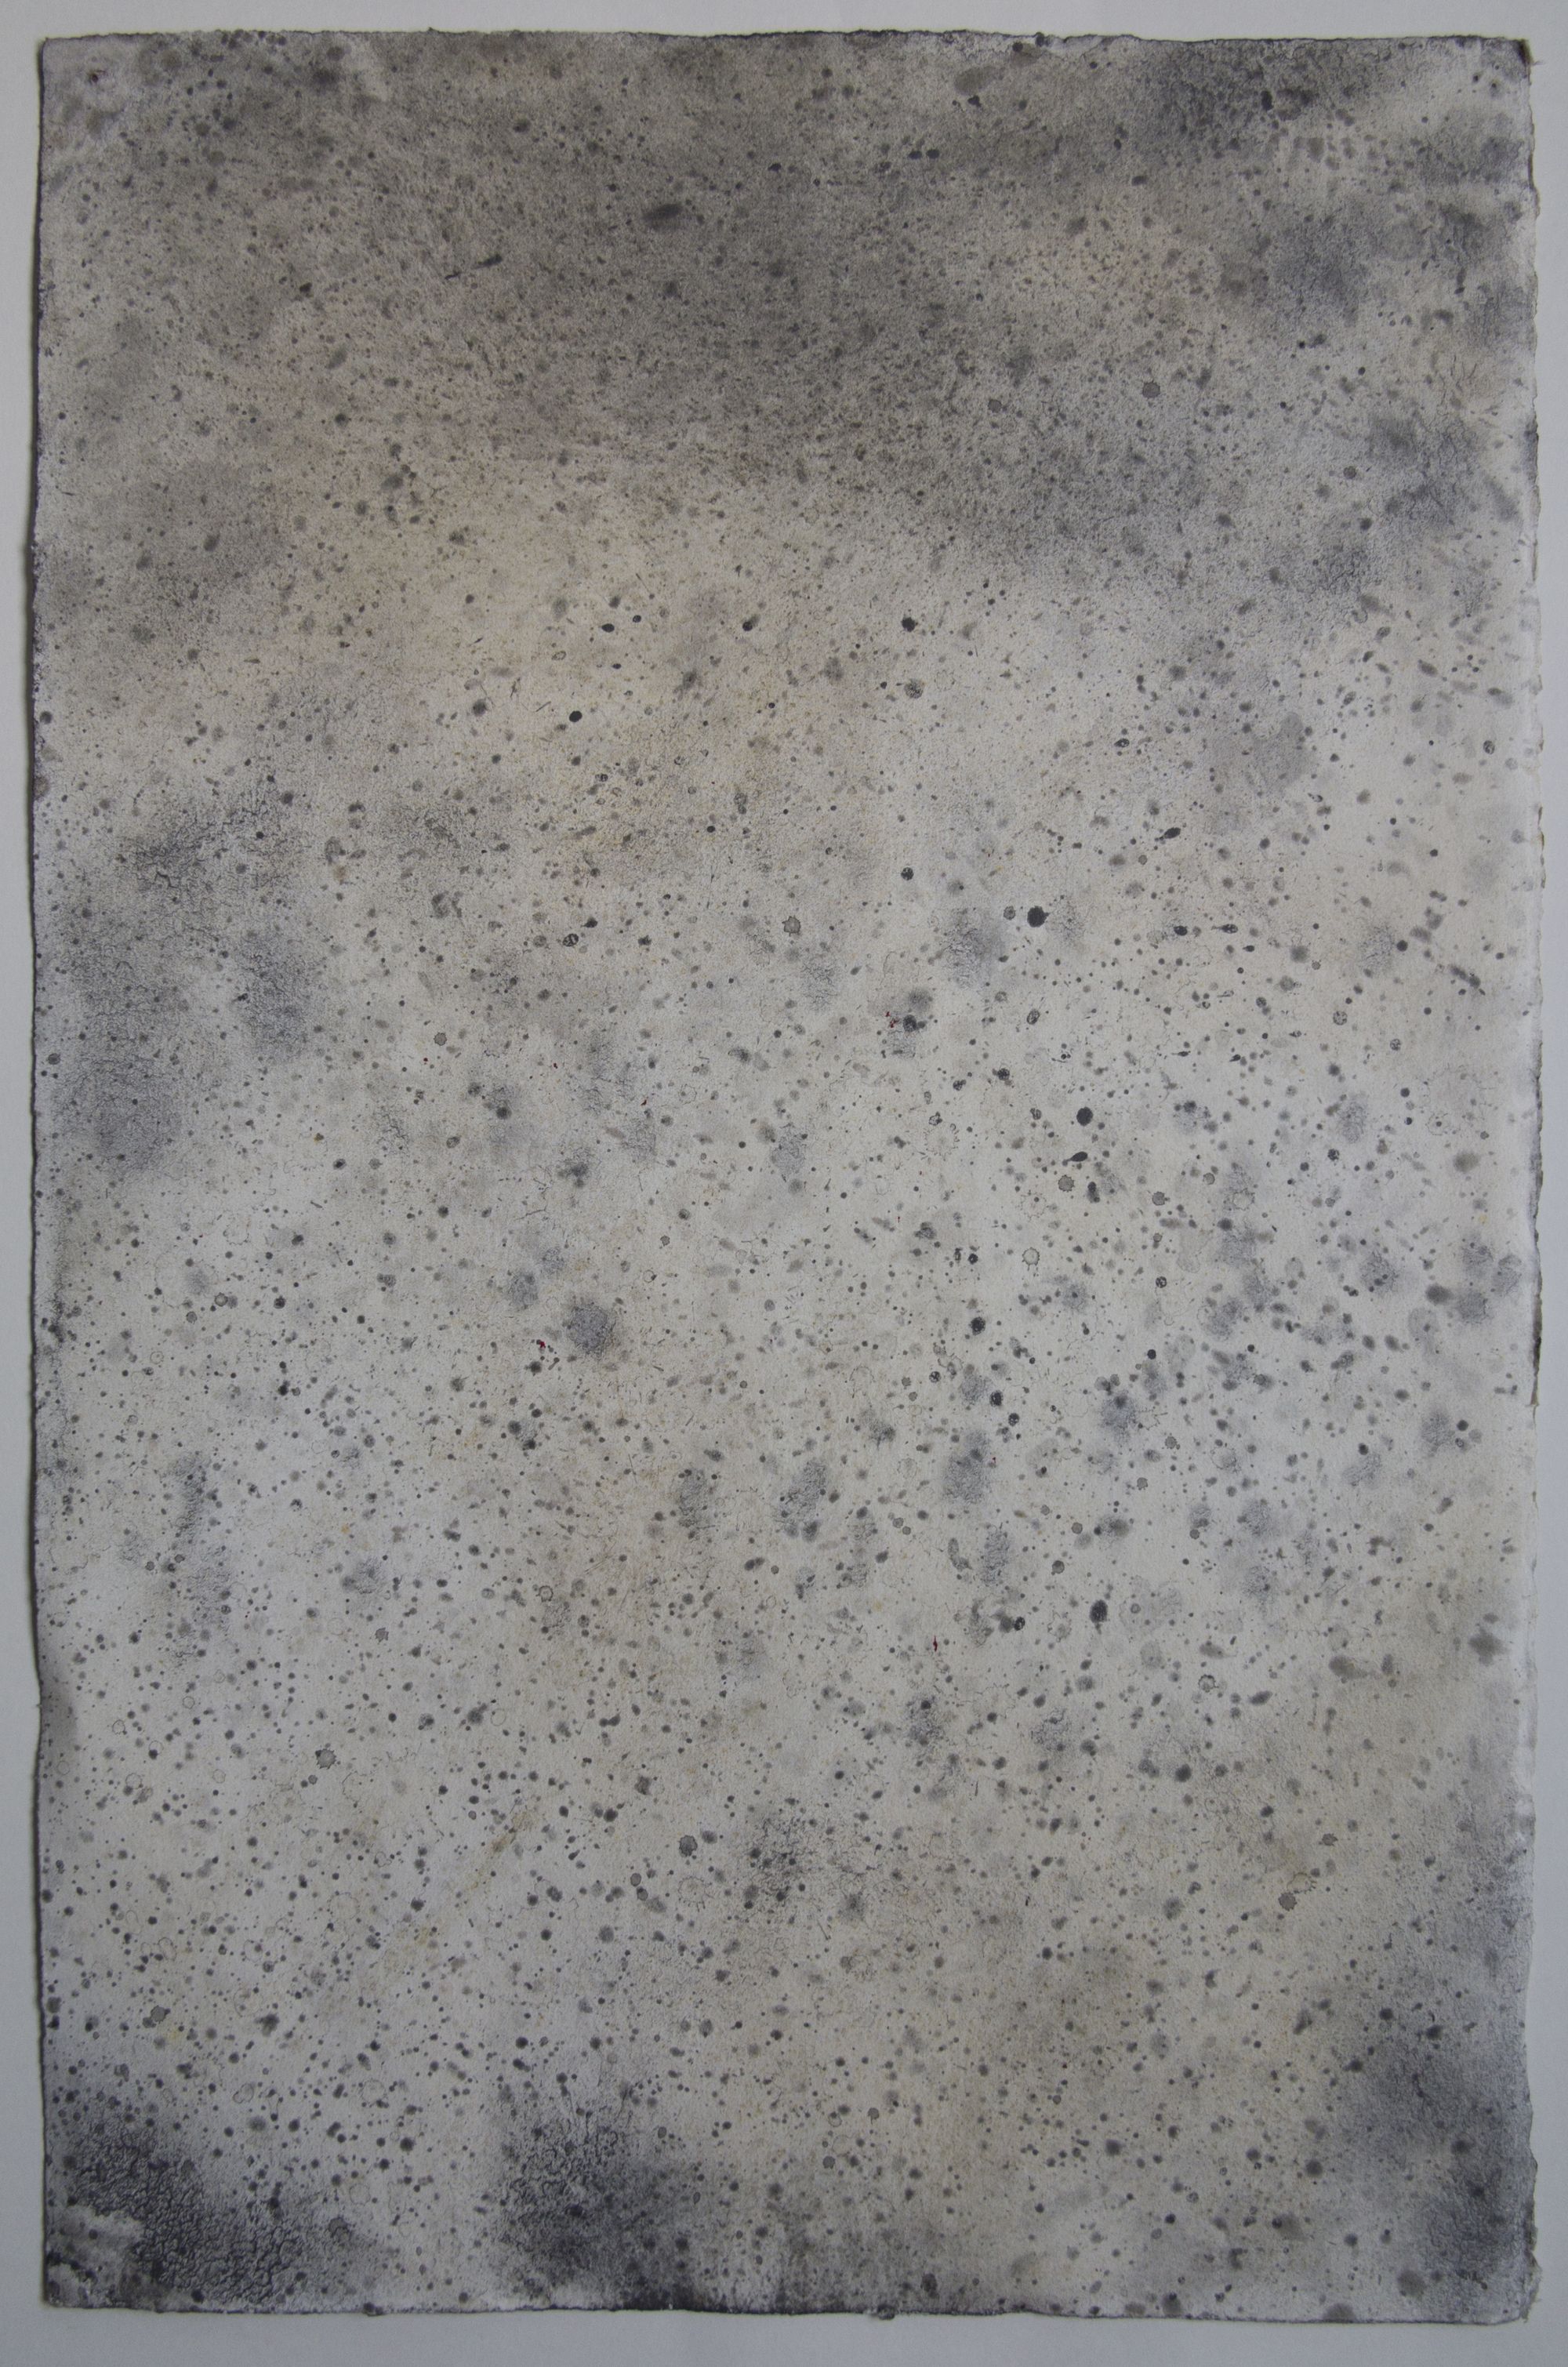 Sable #1, 50 x 32.5cm, 2011